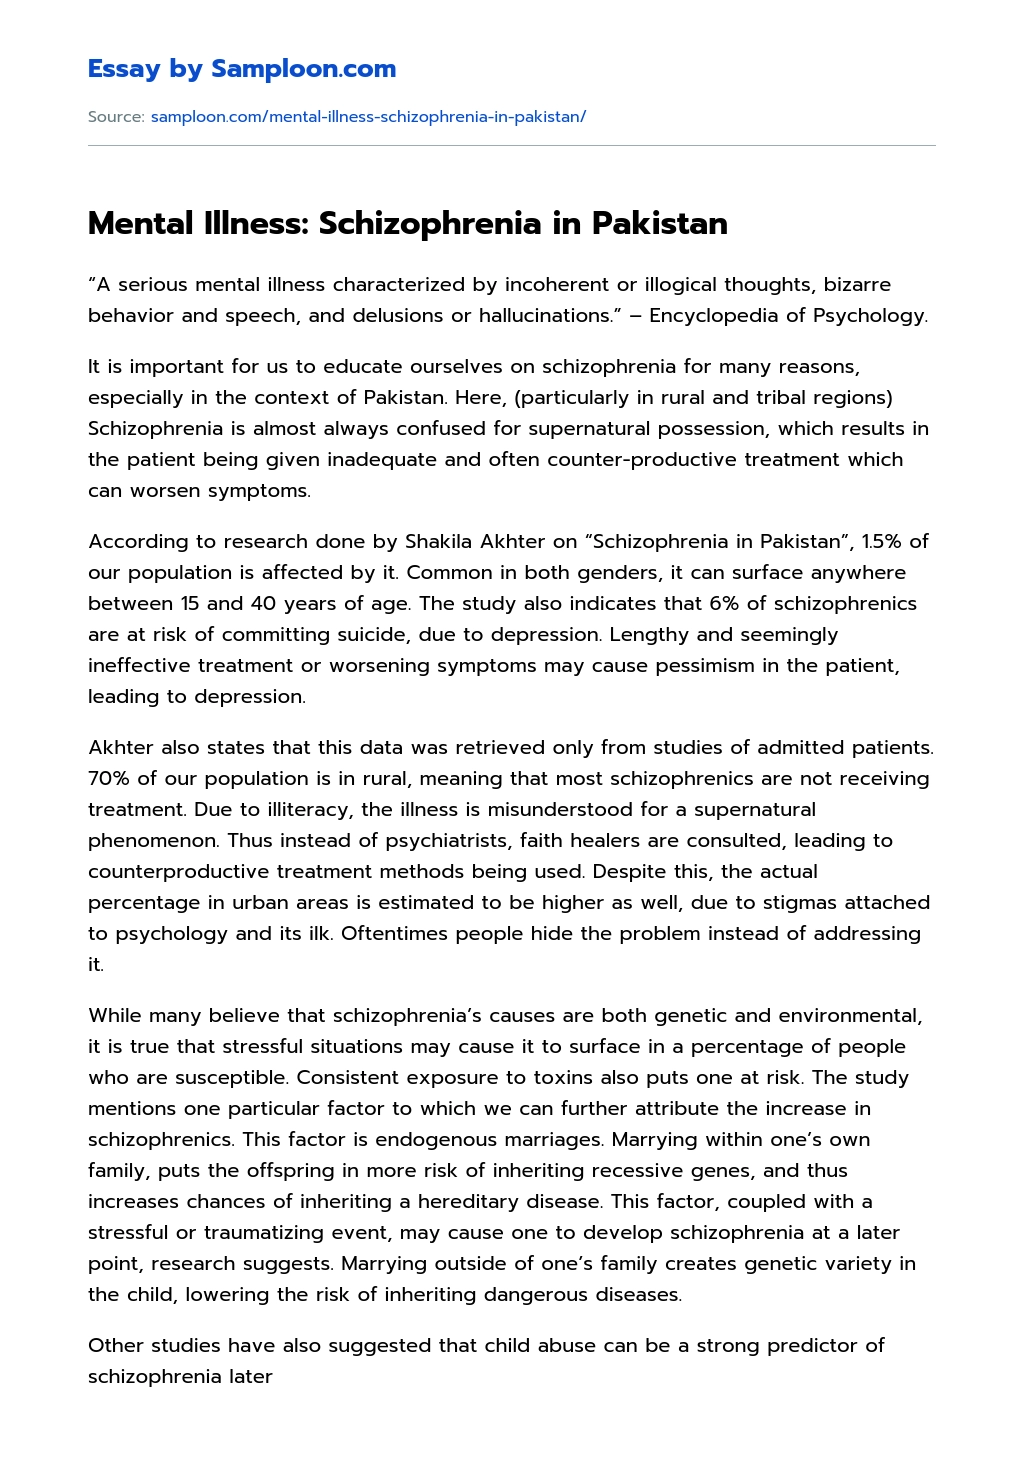 Mental Illness: Schizophrenia in Pakistan essay